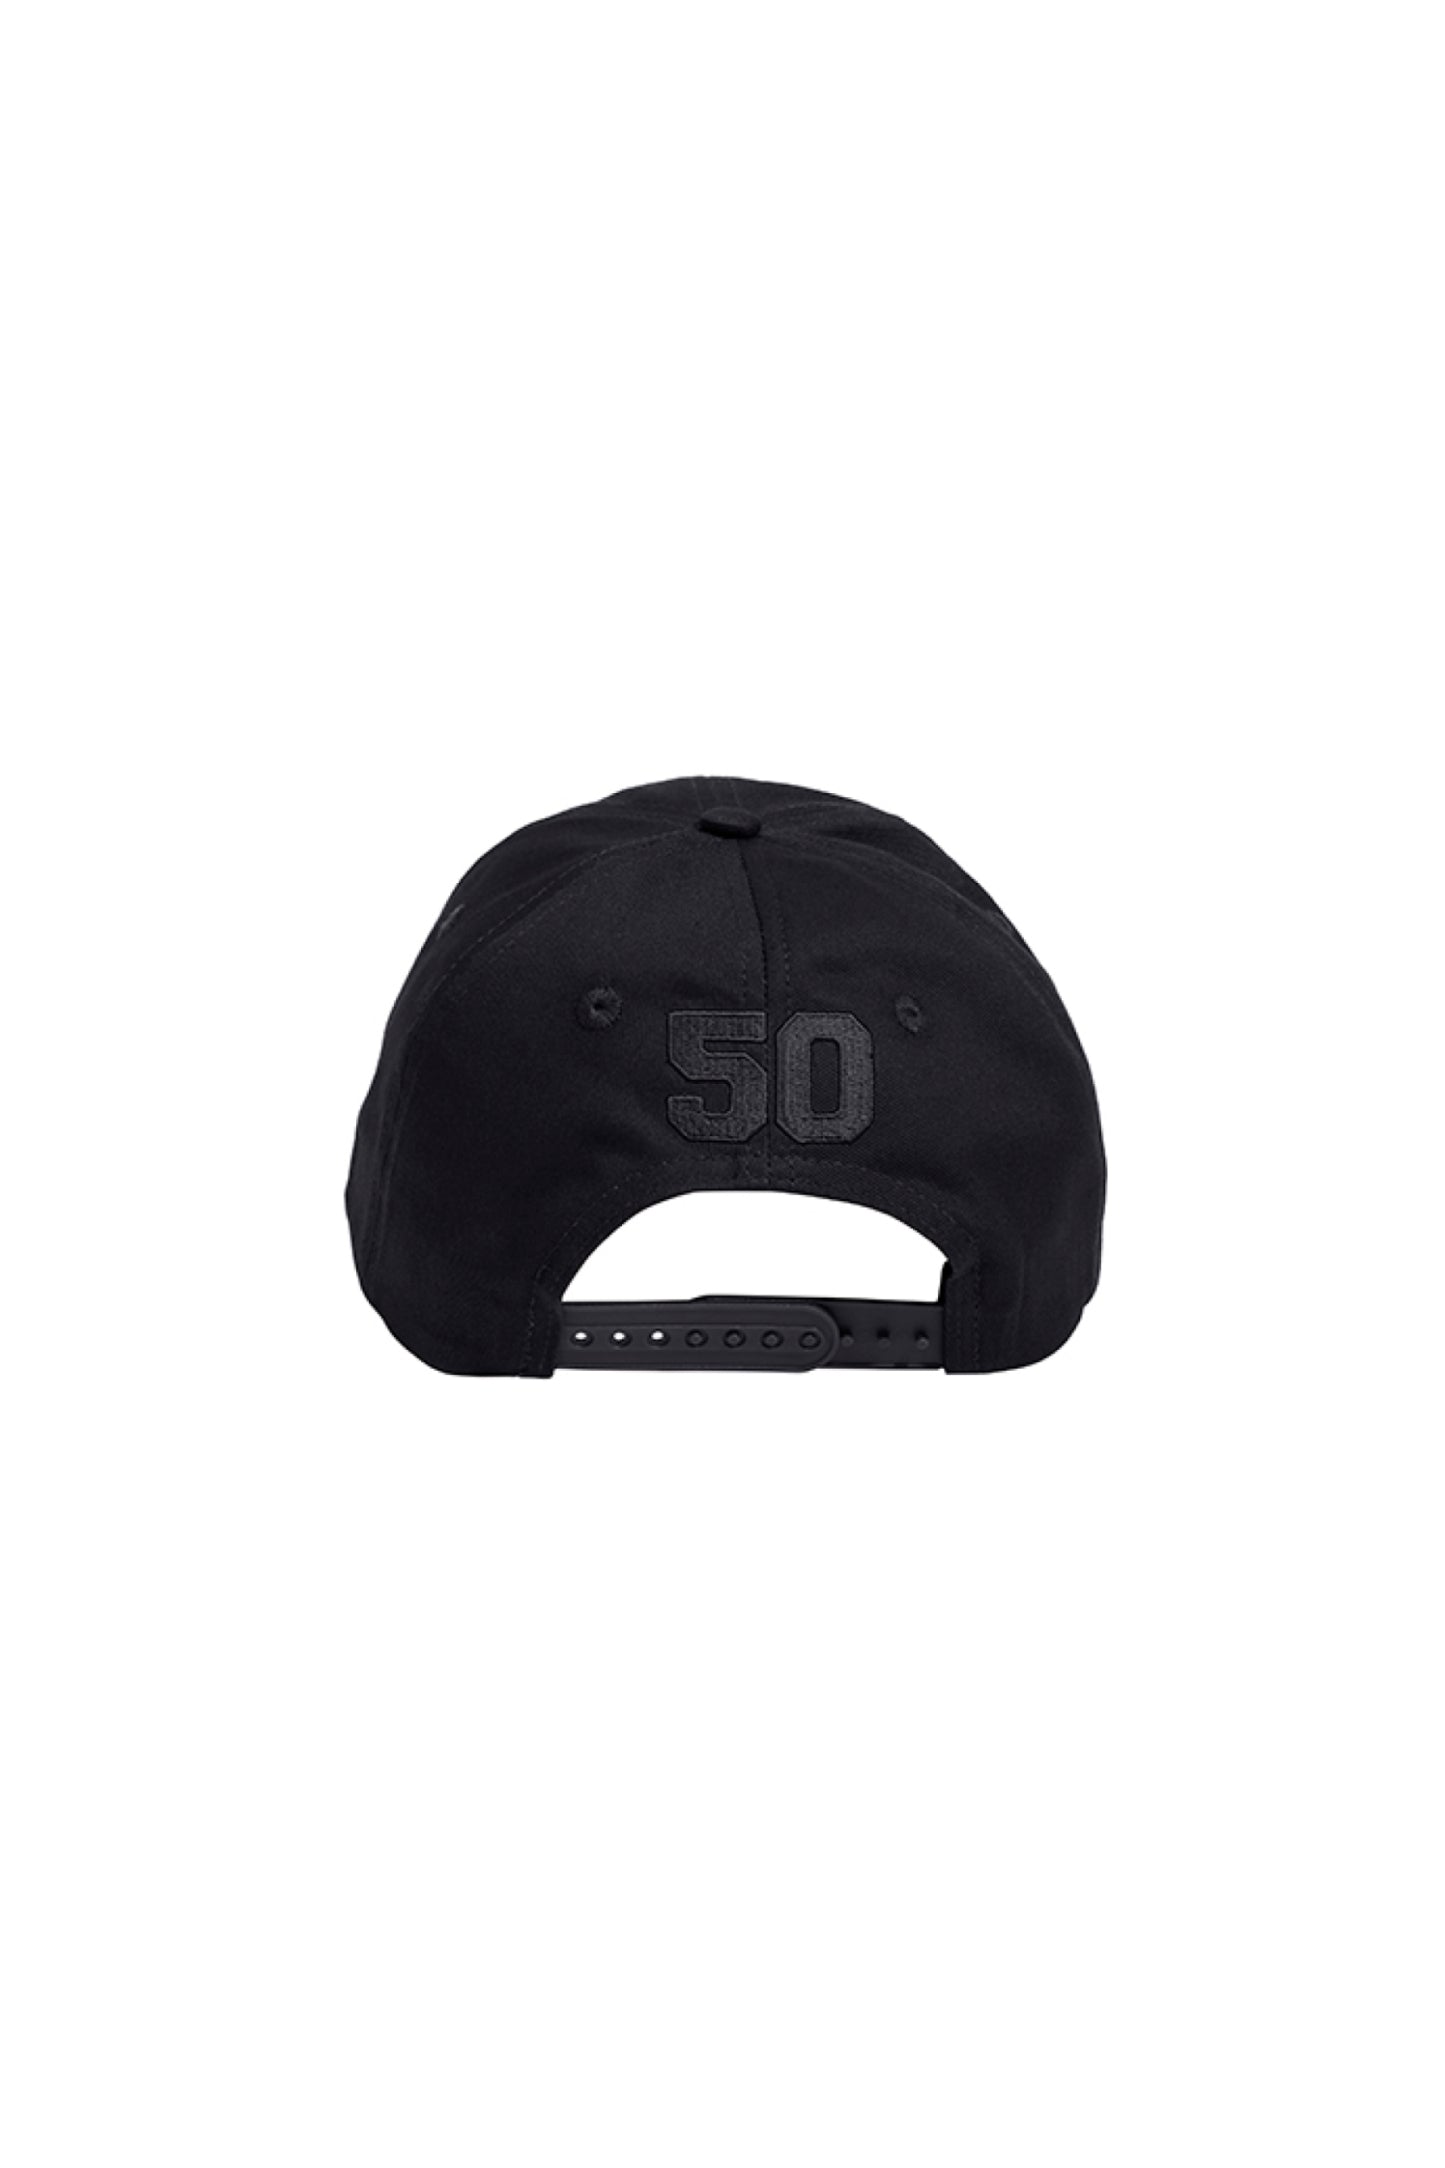 Black/Black Baseball Hat